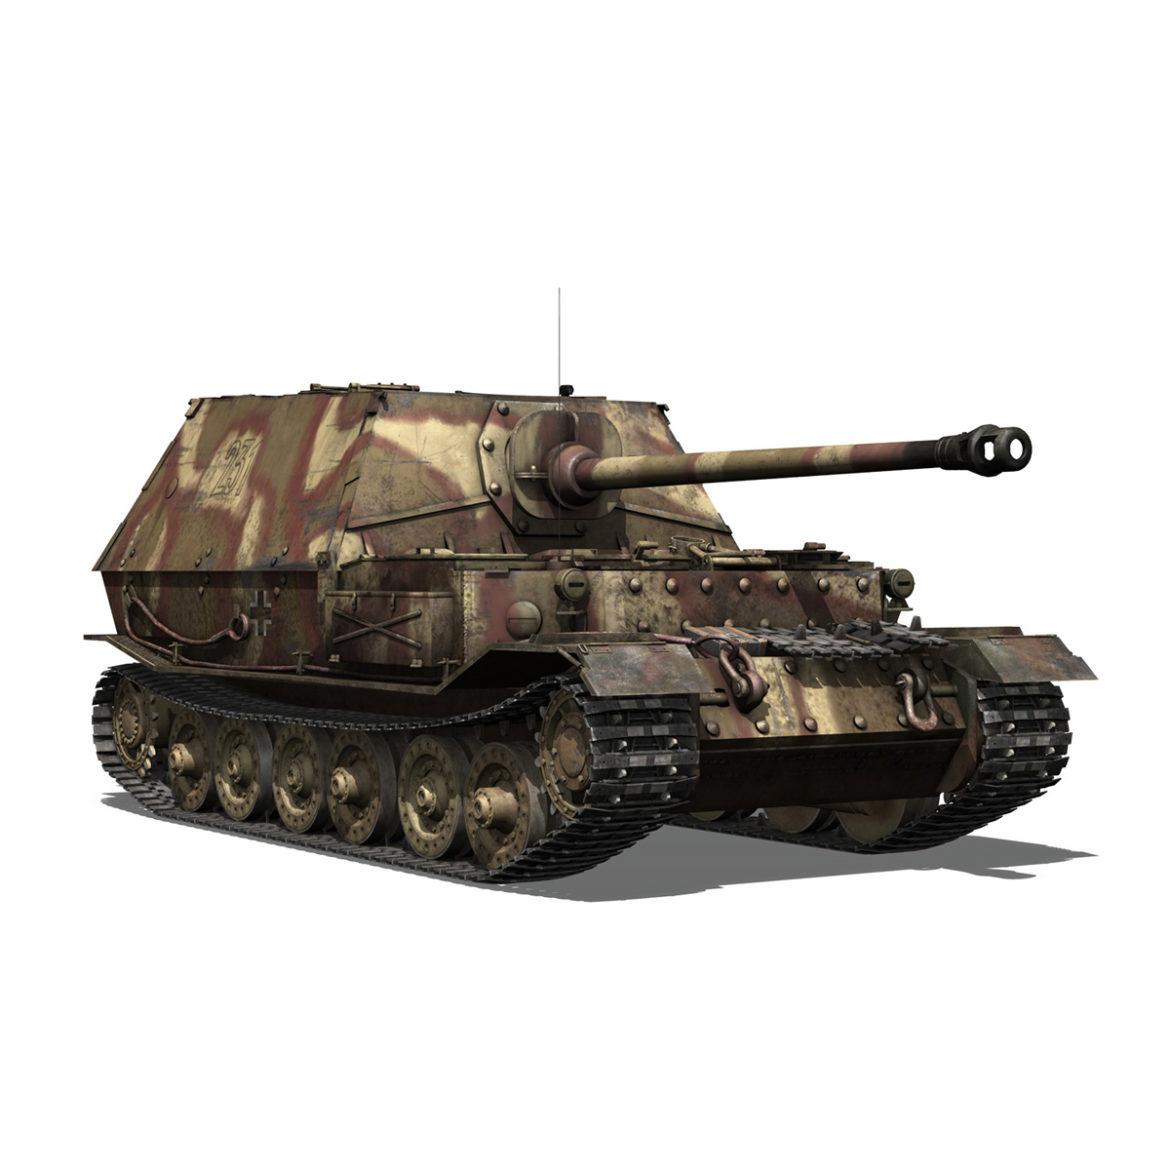 ferdinand tank destroyer – tiger (p) – 231 3d model 3ds fbx c4d lwo obj 295025